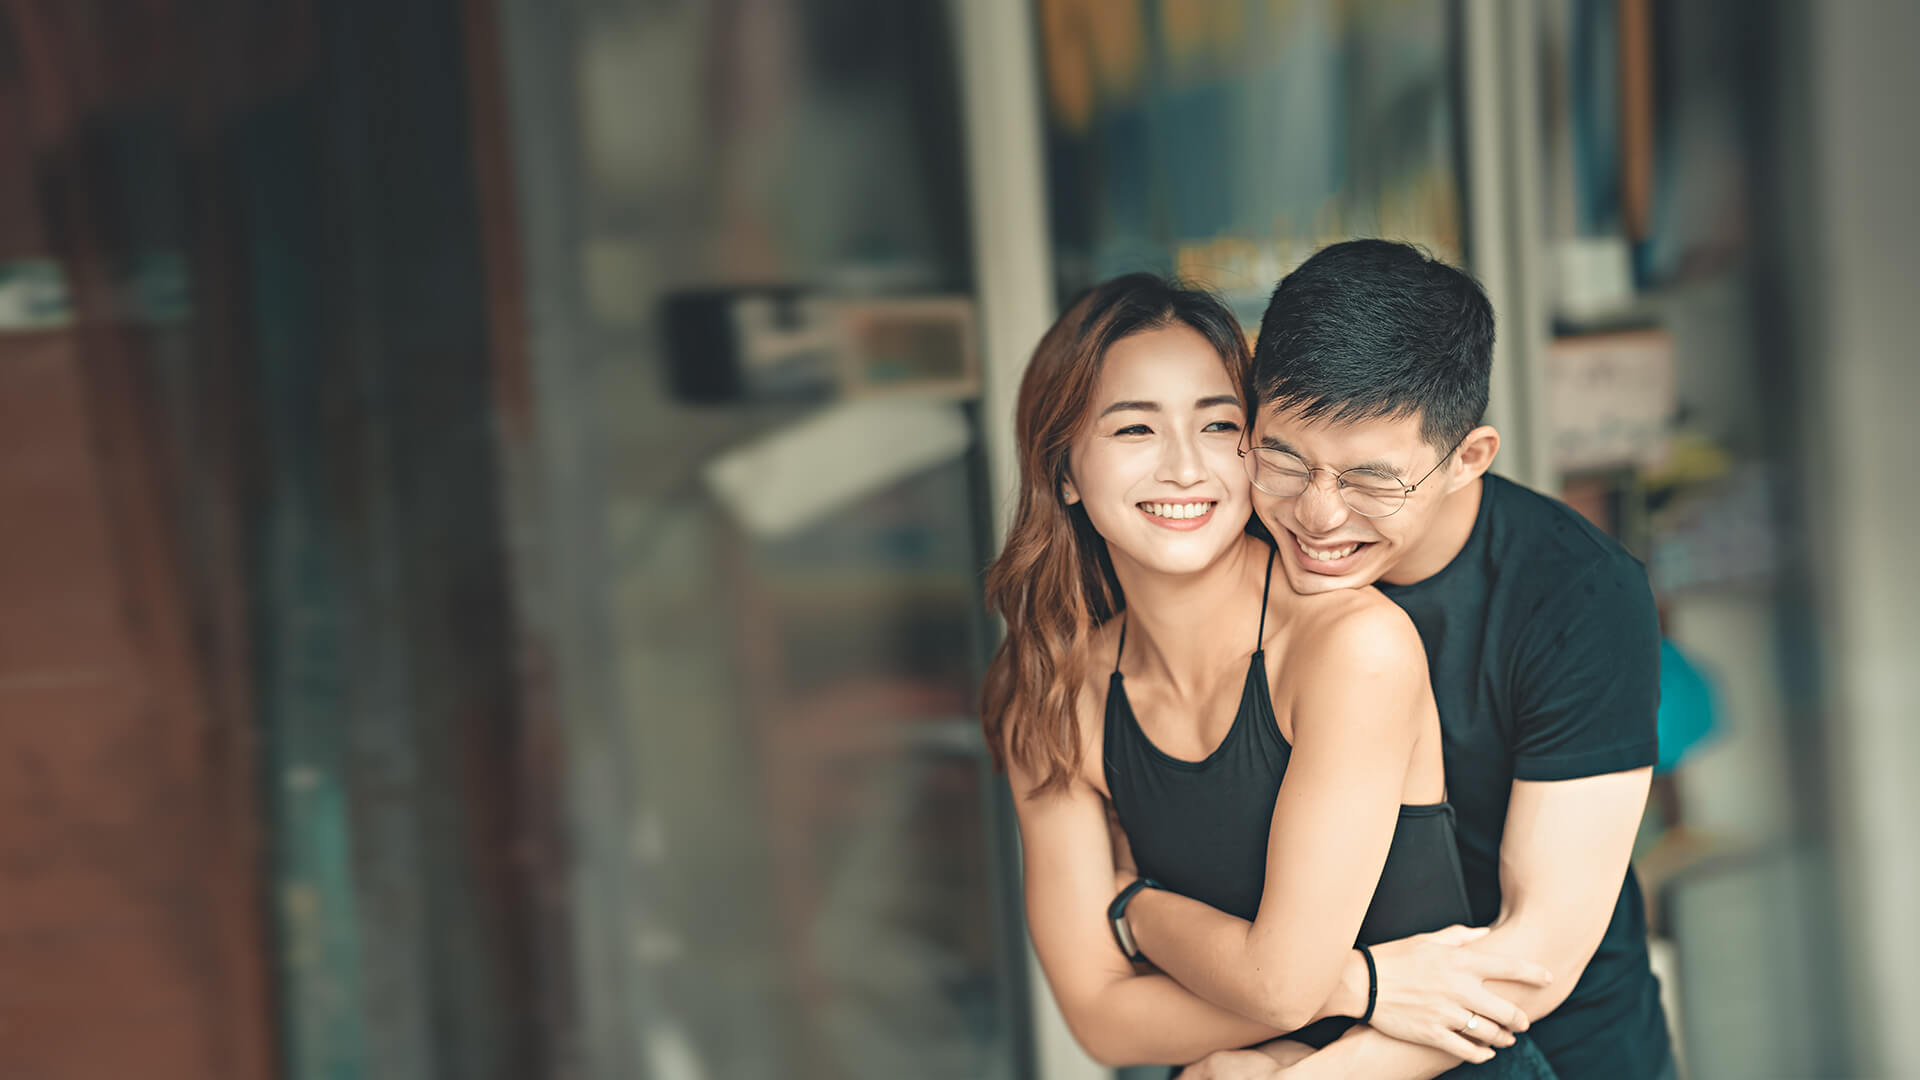 Asian dating Australia Meet genuine Asian singles on eharmony